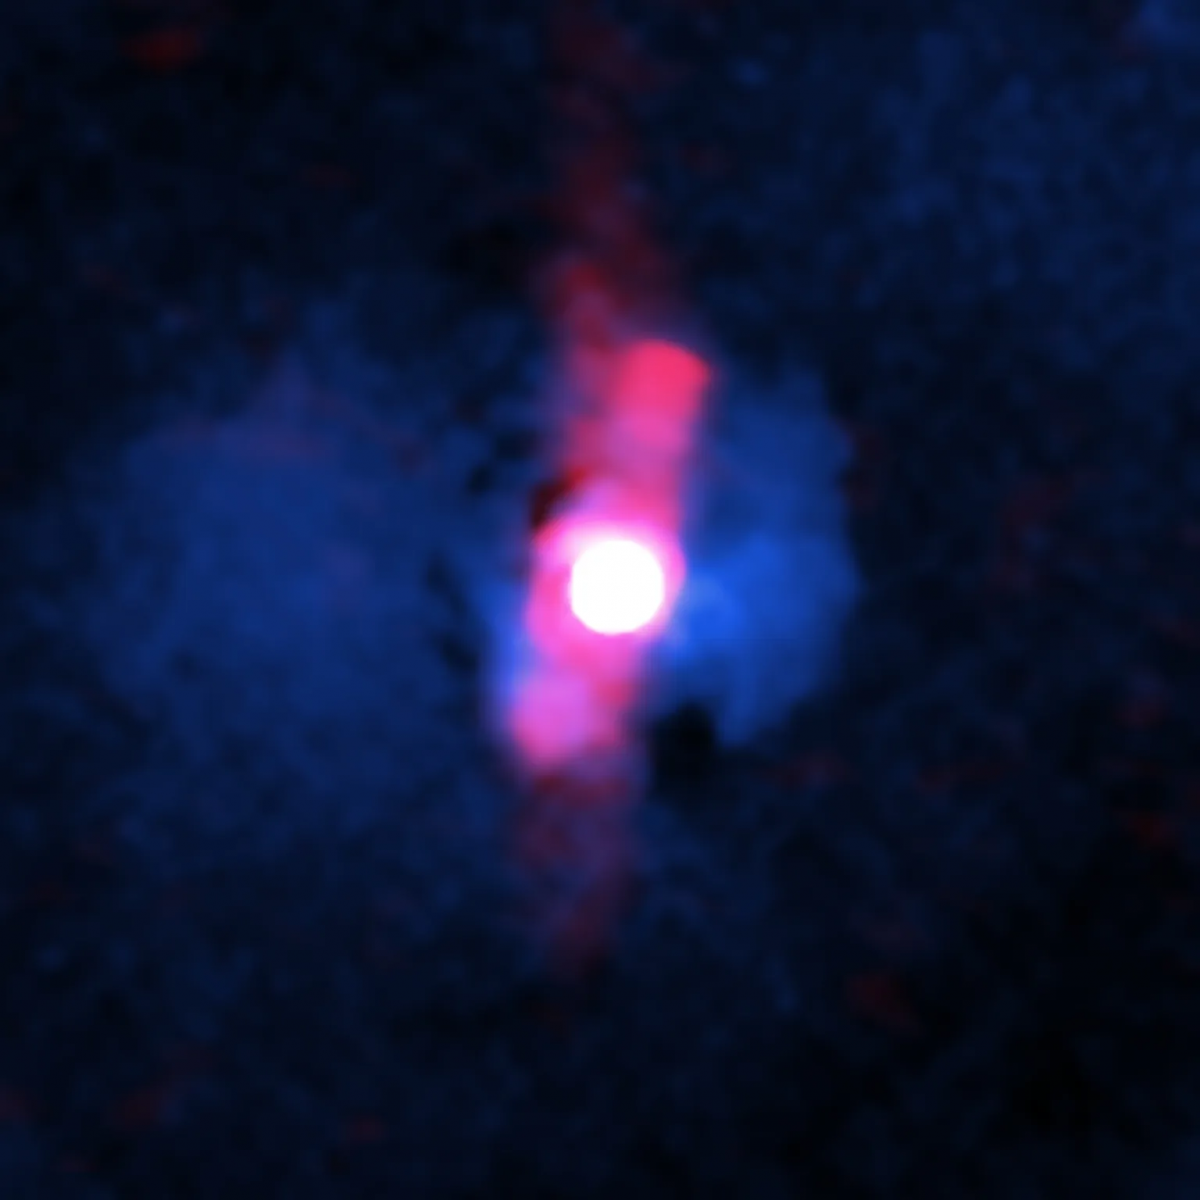 NASA’s Chandra Identifies an Underachieving Black Hole